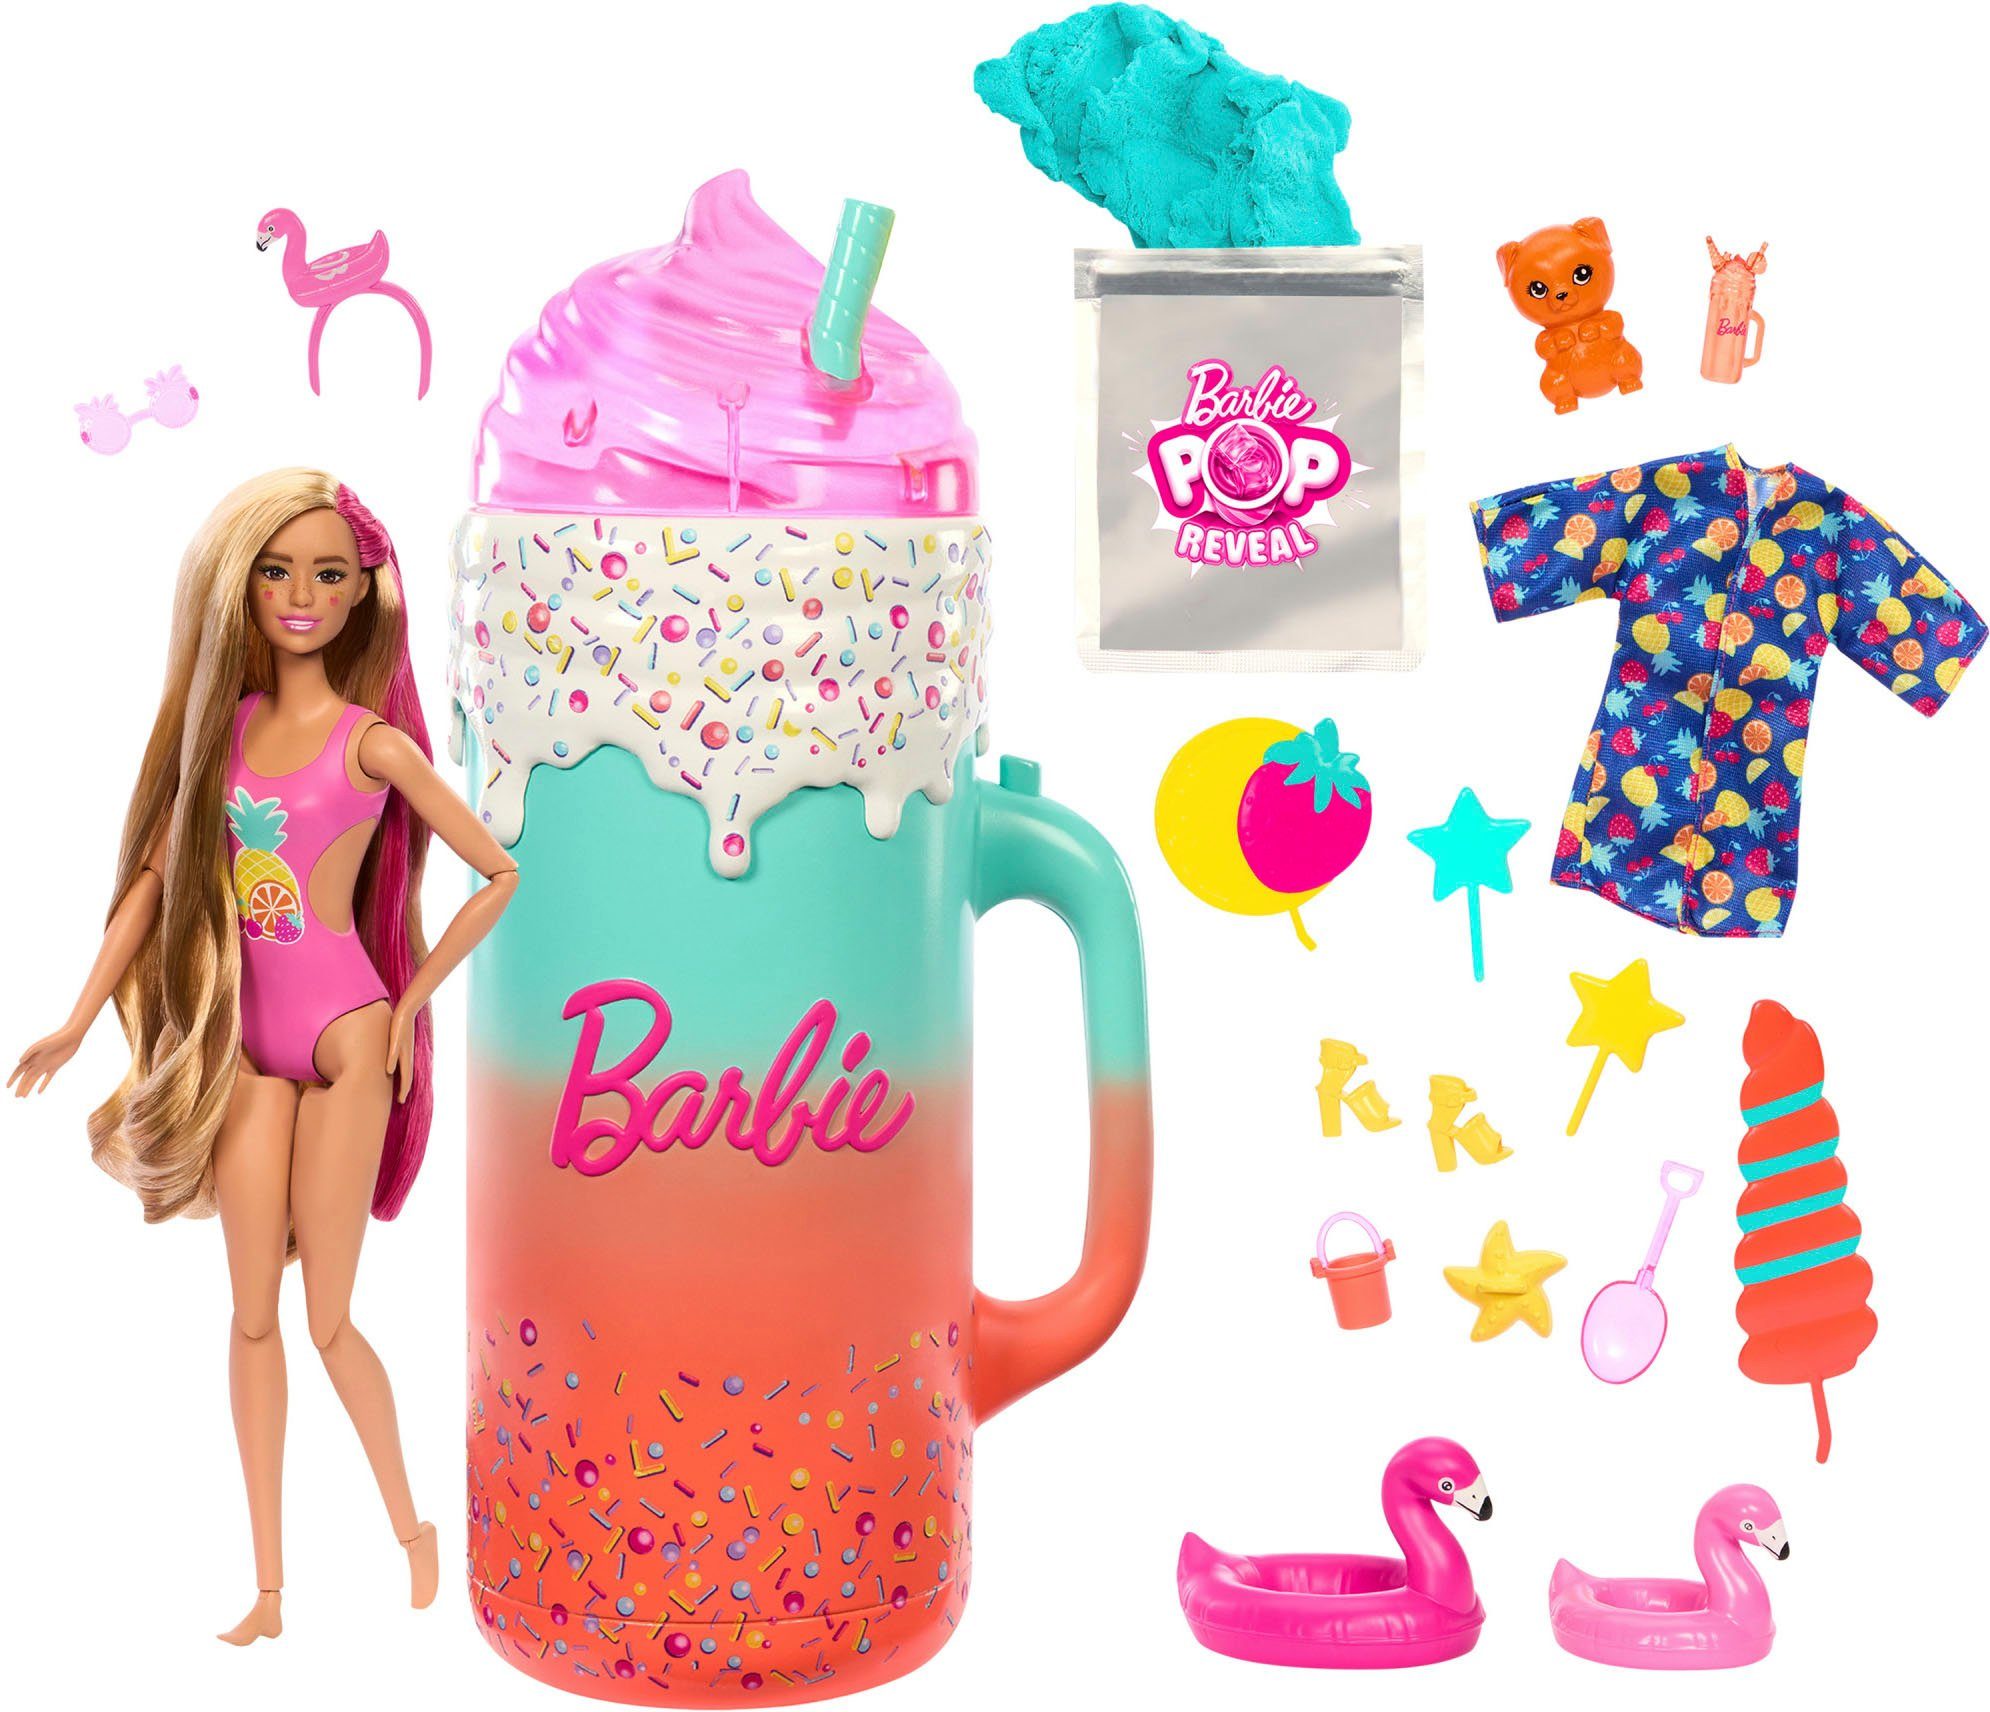 Barbie Anziehpuppe Pop! Reveal, Tropical Smoothie